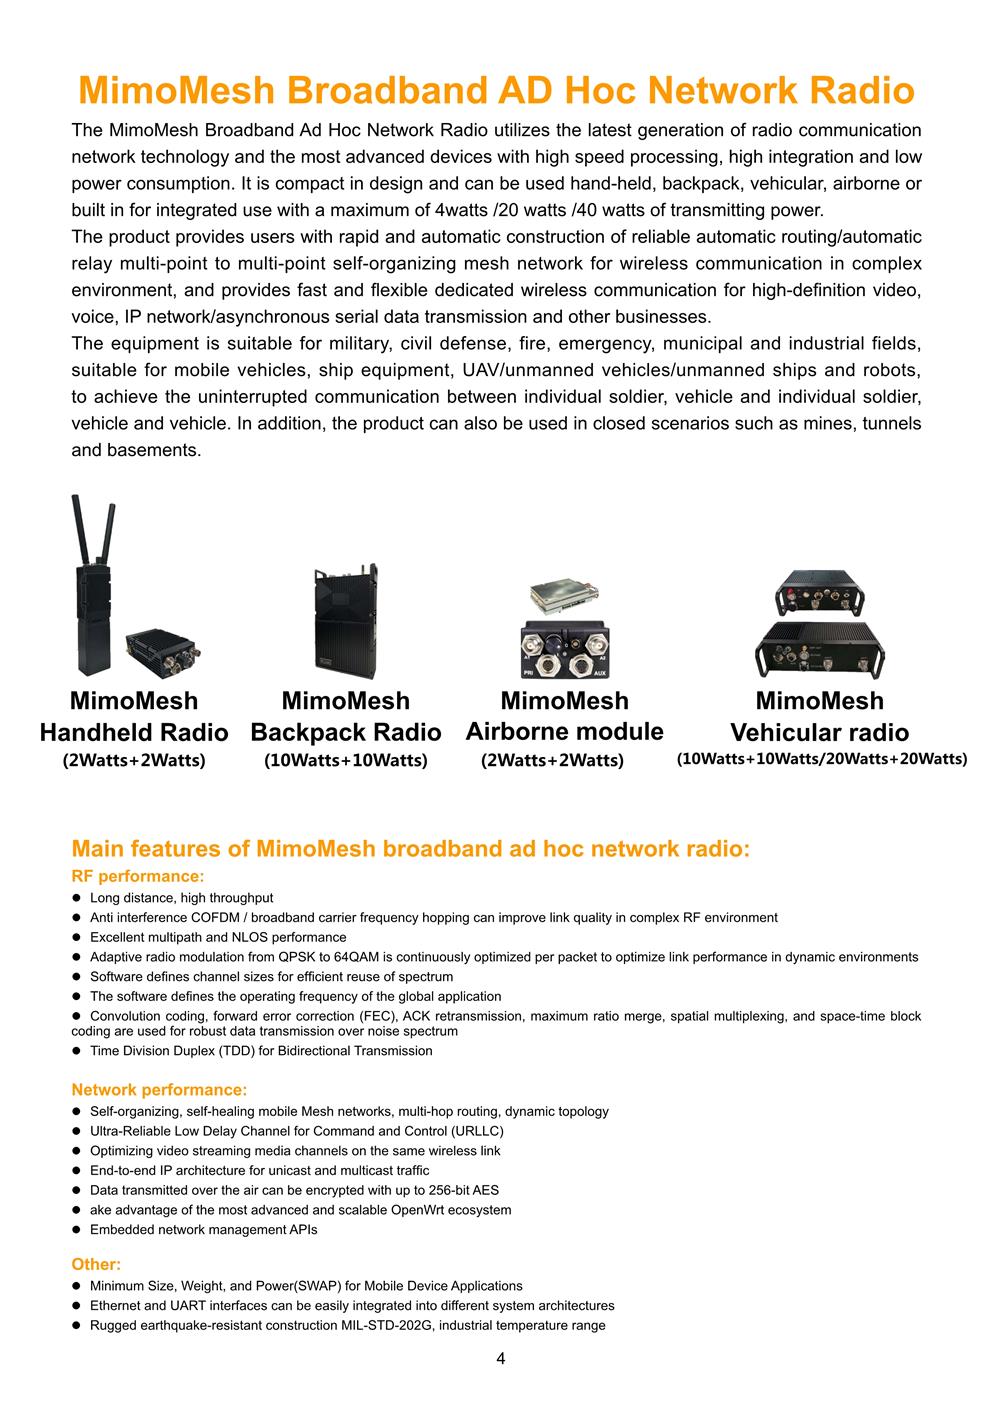 Broadband Ad Hoc Network Radio Applications(图5)